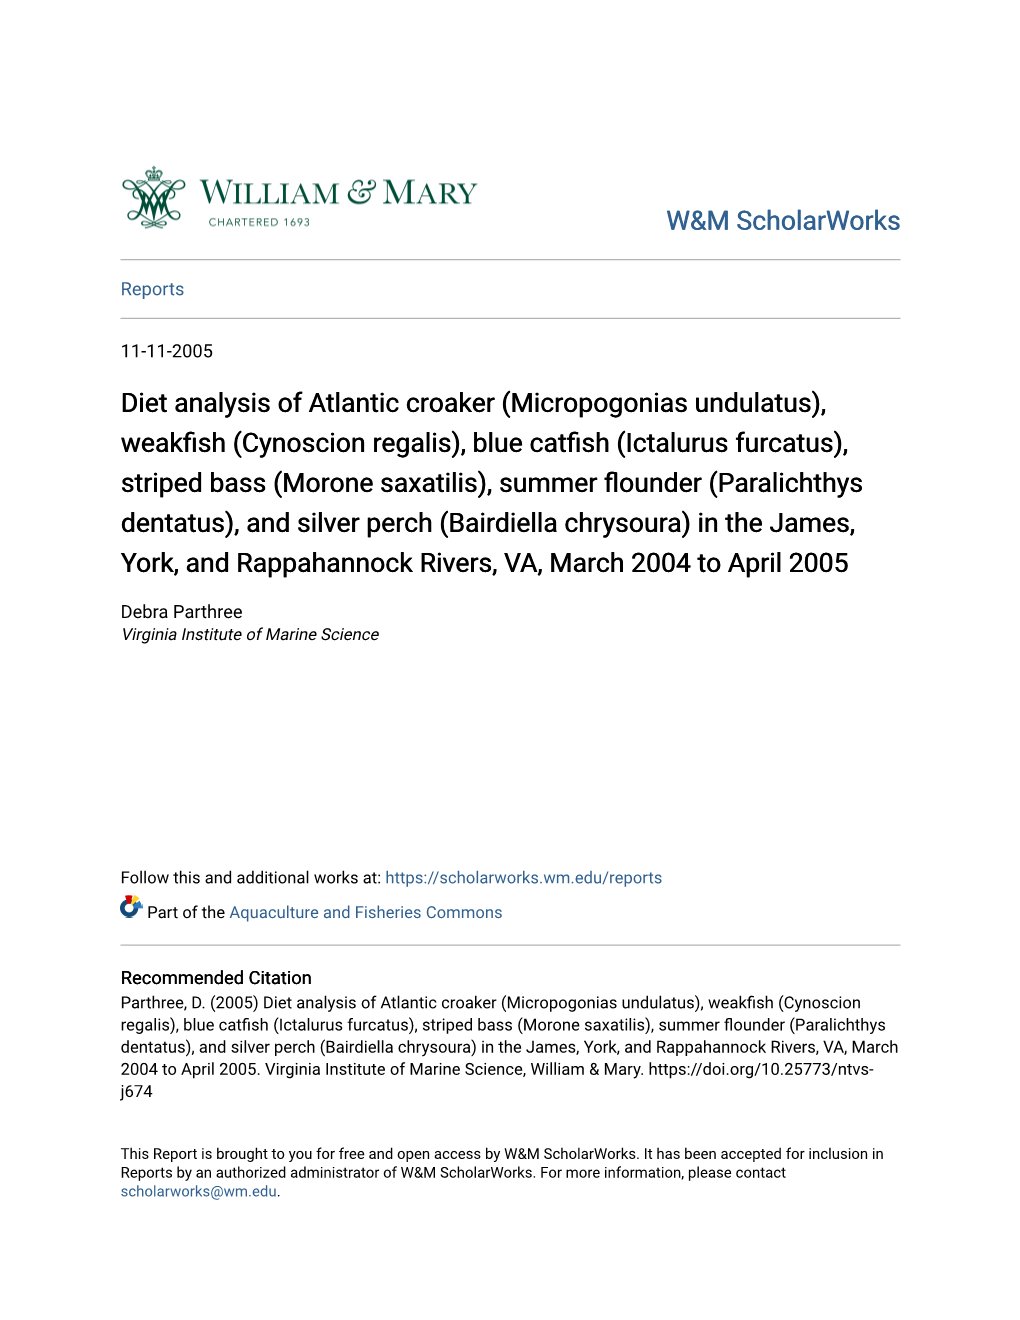 Diet Analysis of Atlantic Croaker (Micropogonias Undulatus